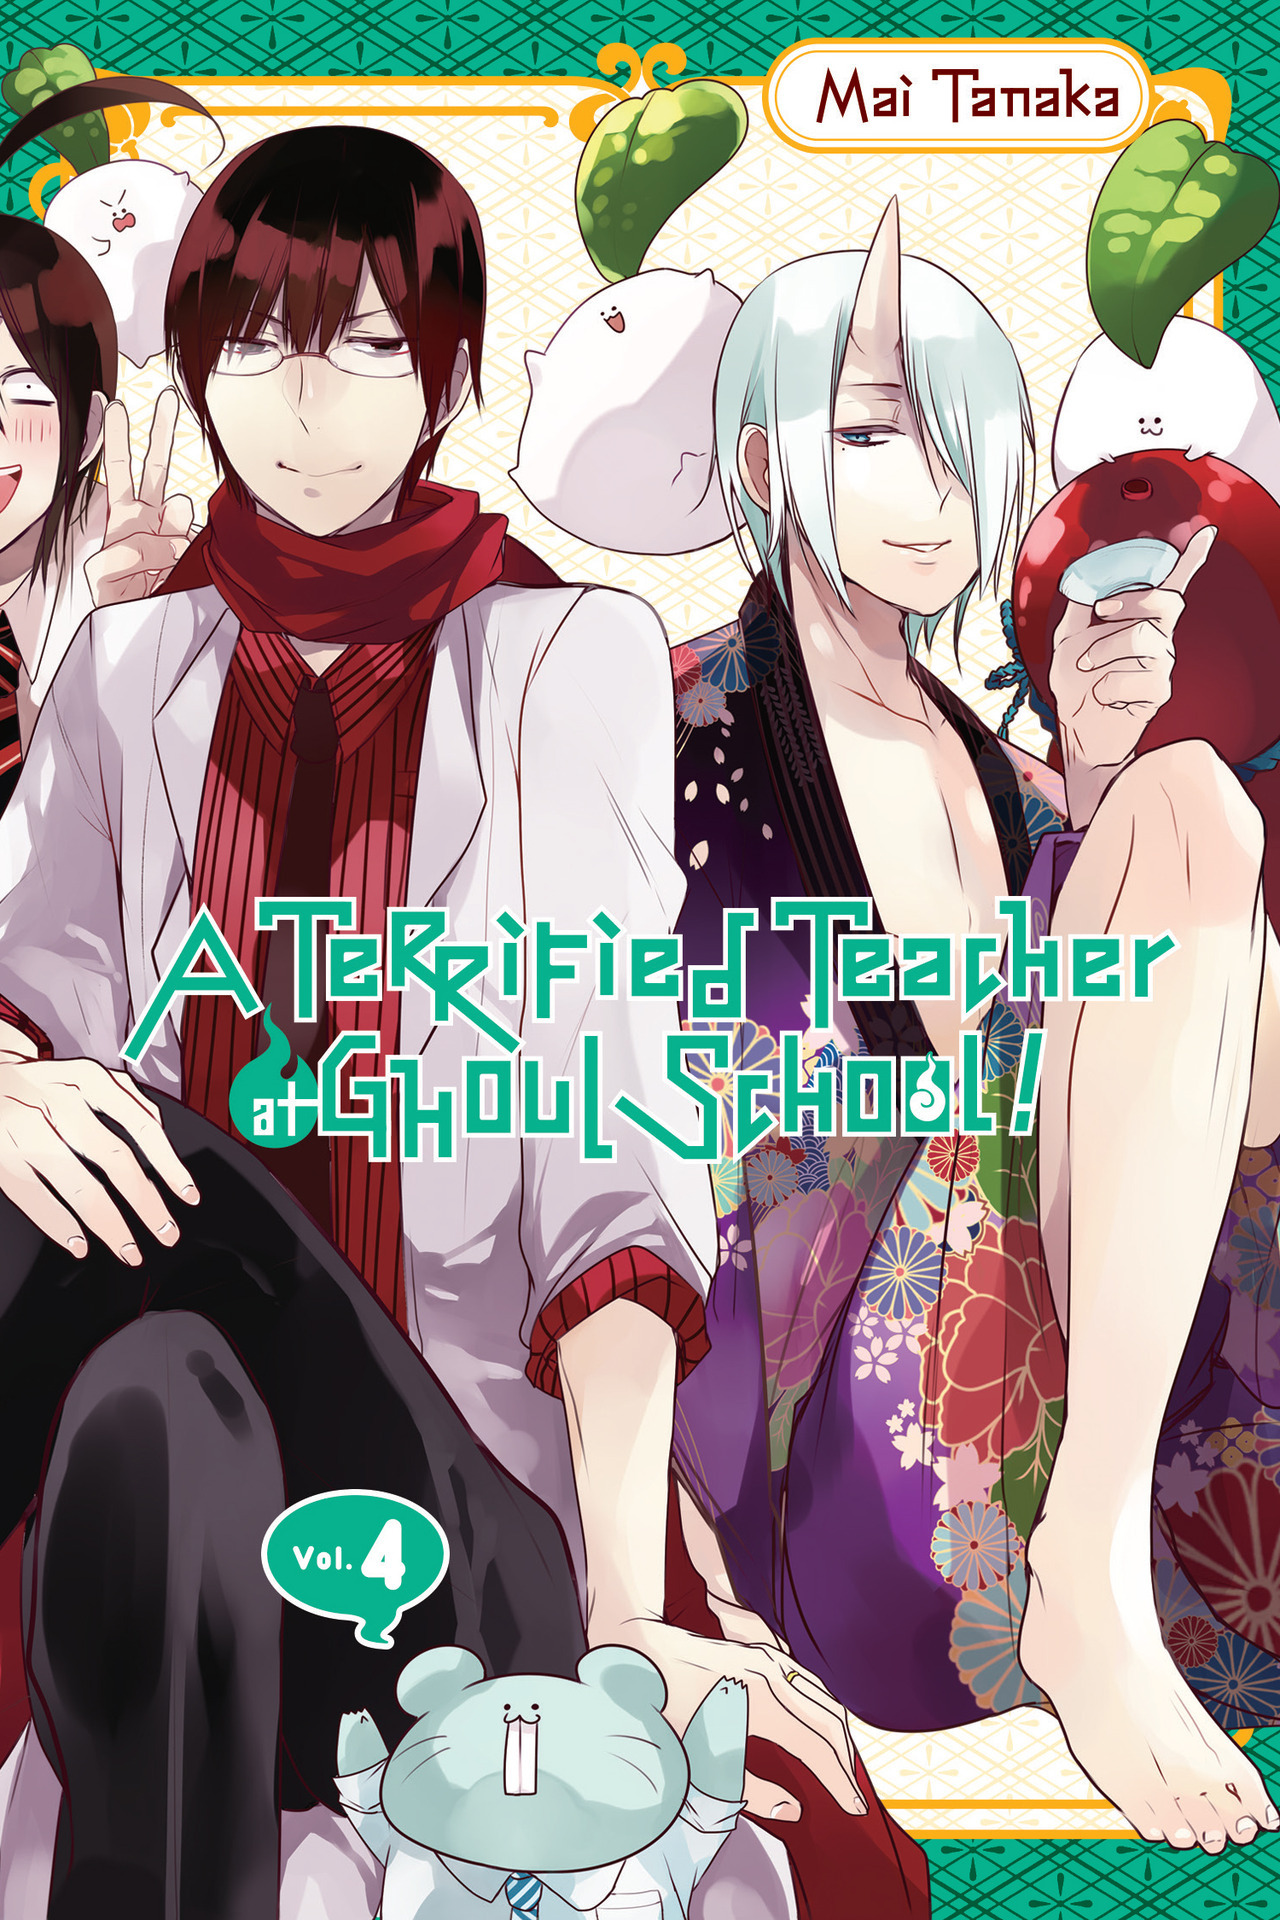 A Terrified Teacher at Ghoul School! - Volume 4 | Mai Tanaka